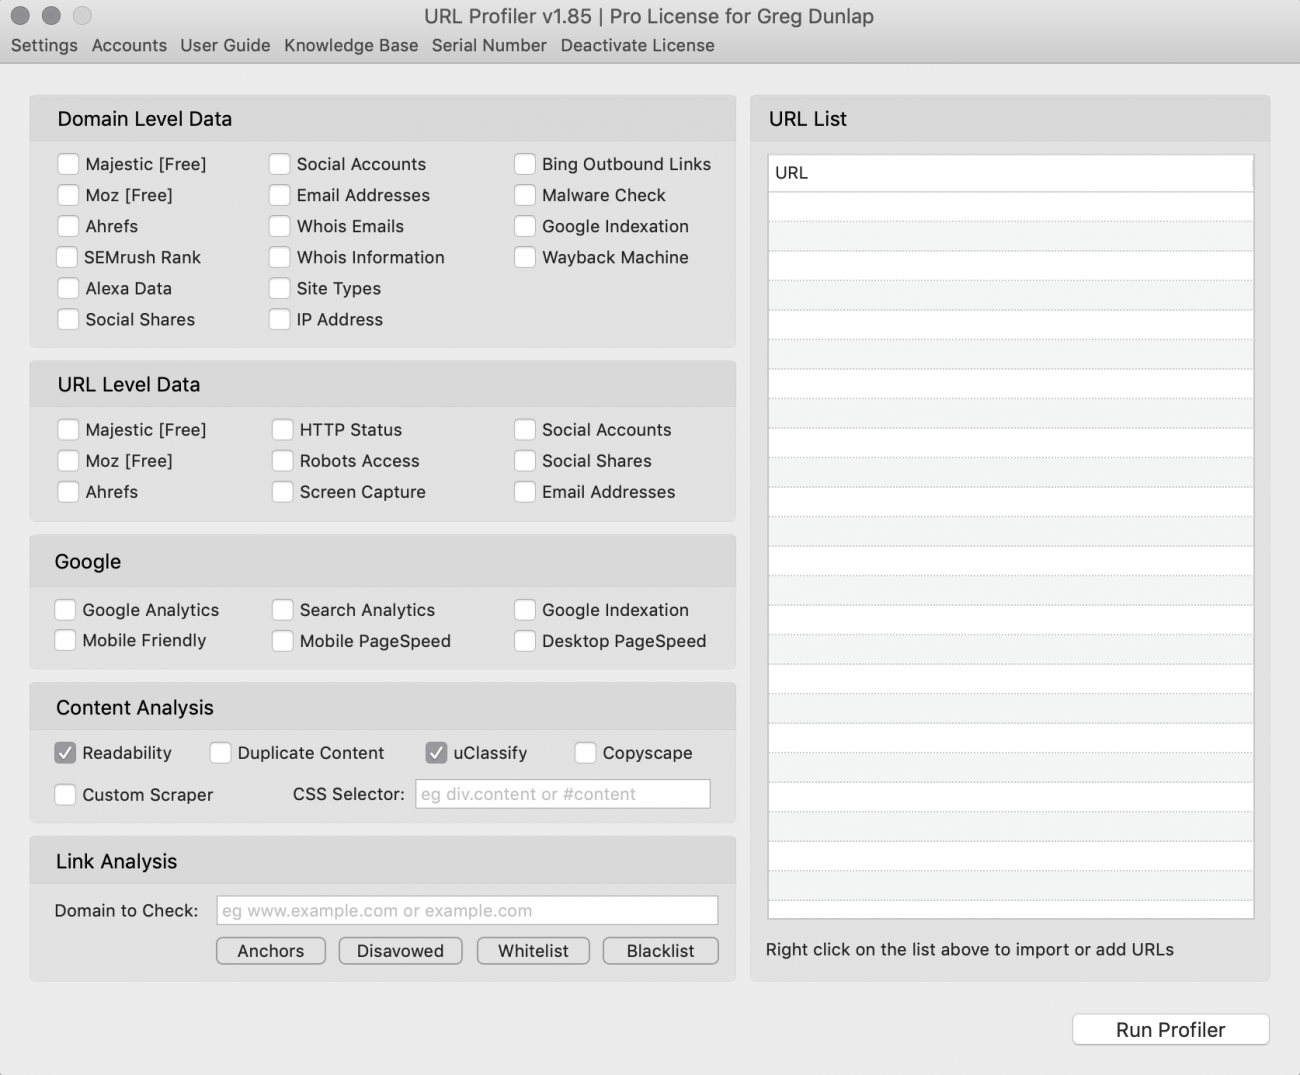 Screenshot of the main workspace for URL Profiler